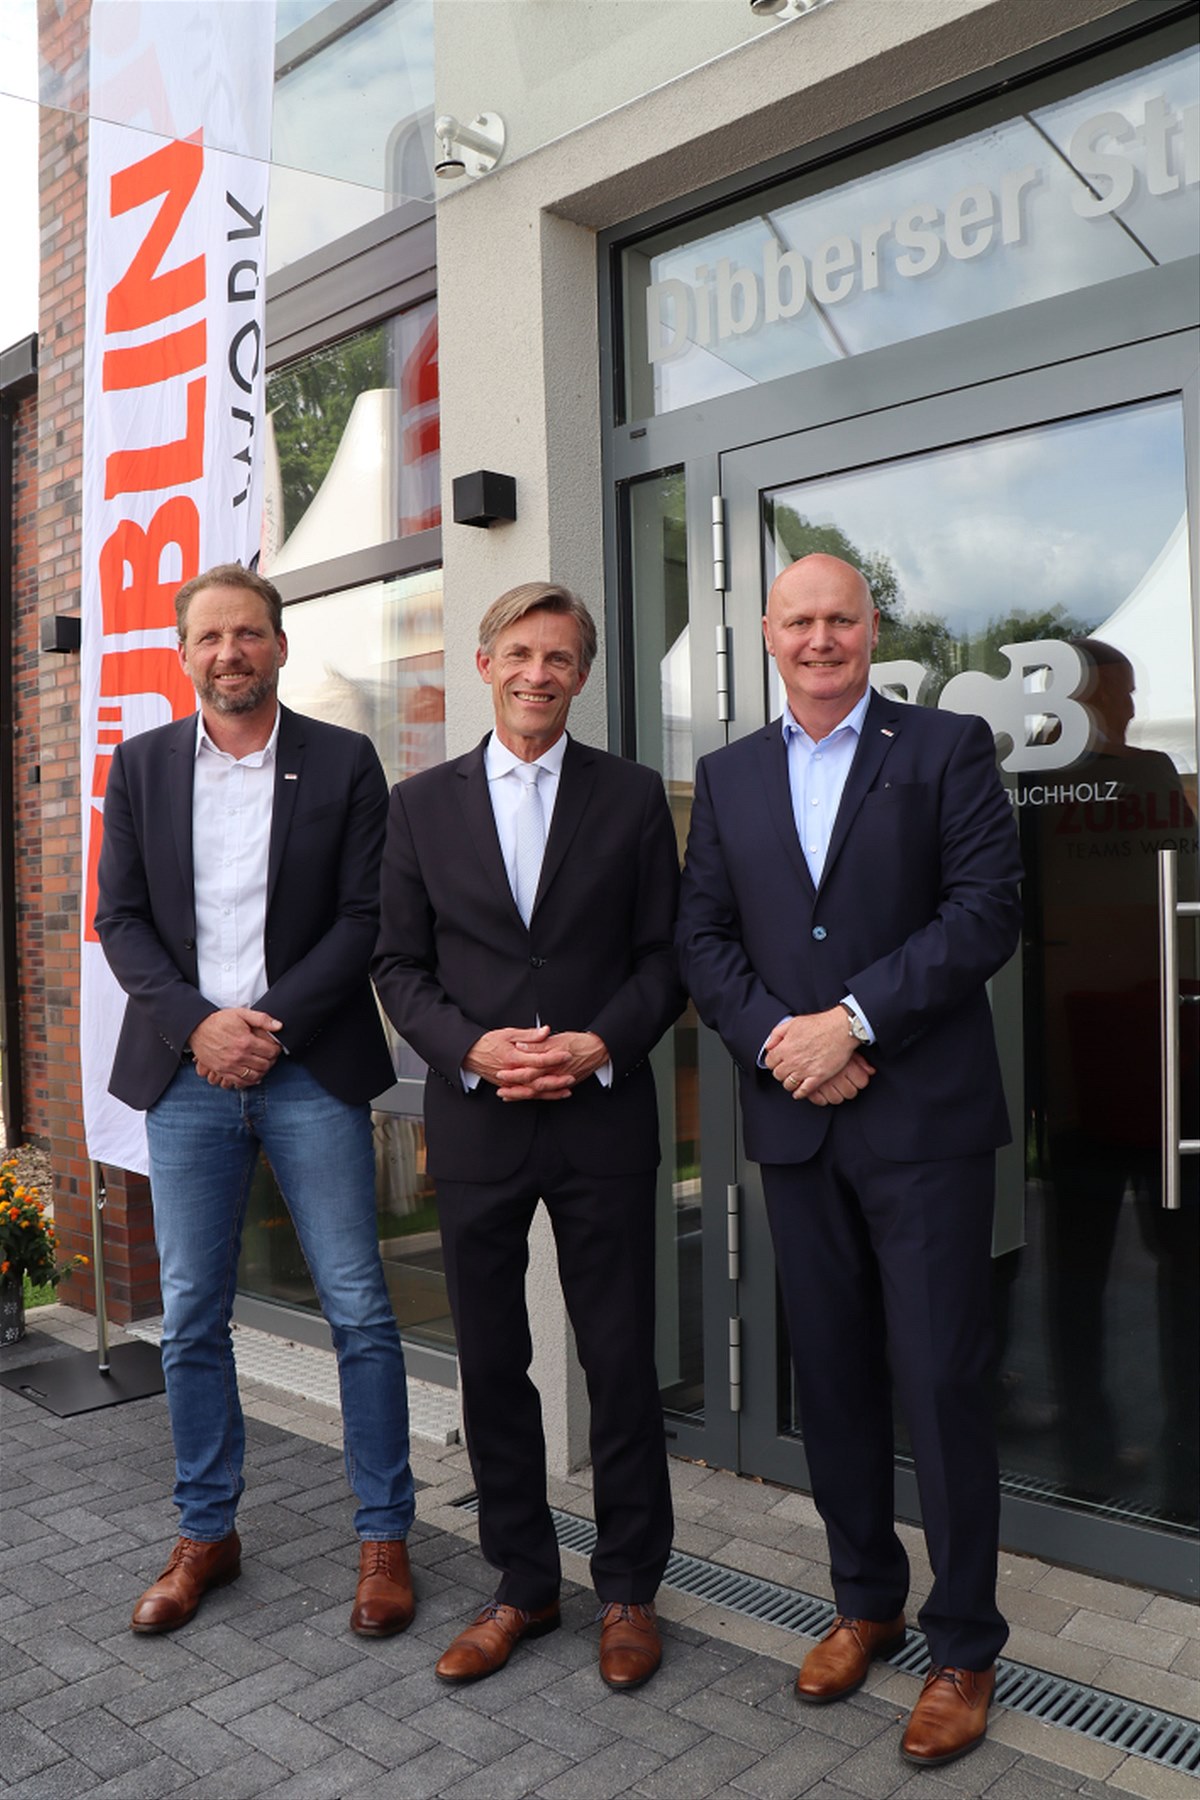 grand opening of new location Süderelbe in Buchholz, Nordheide